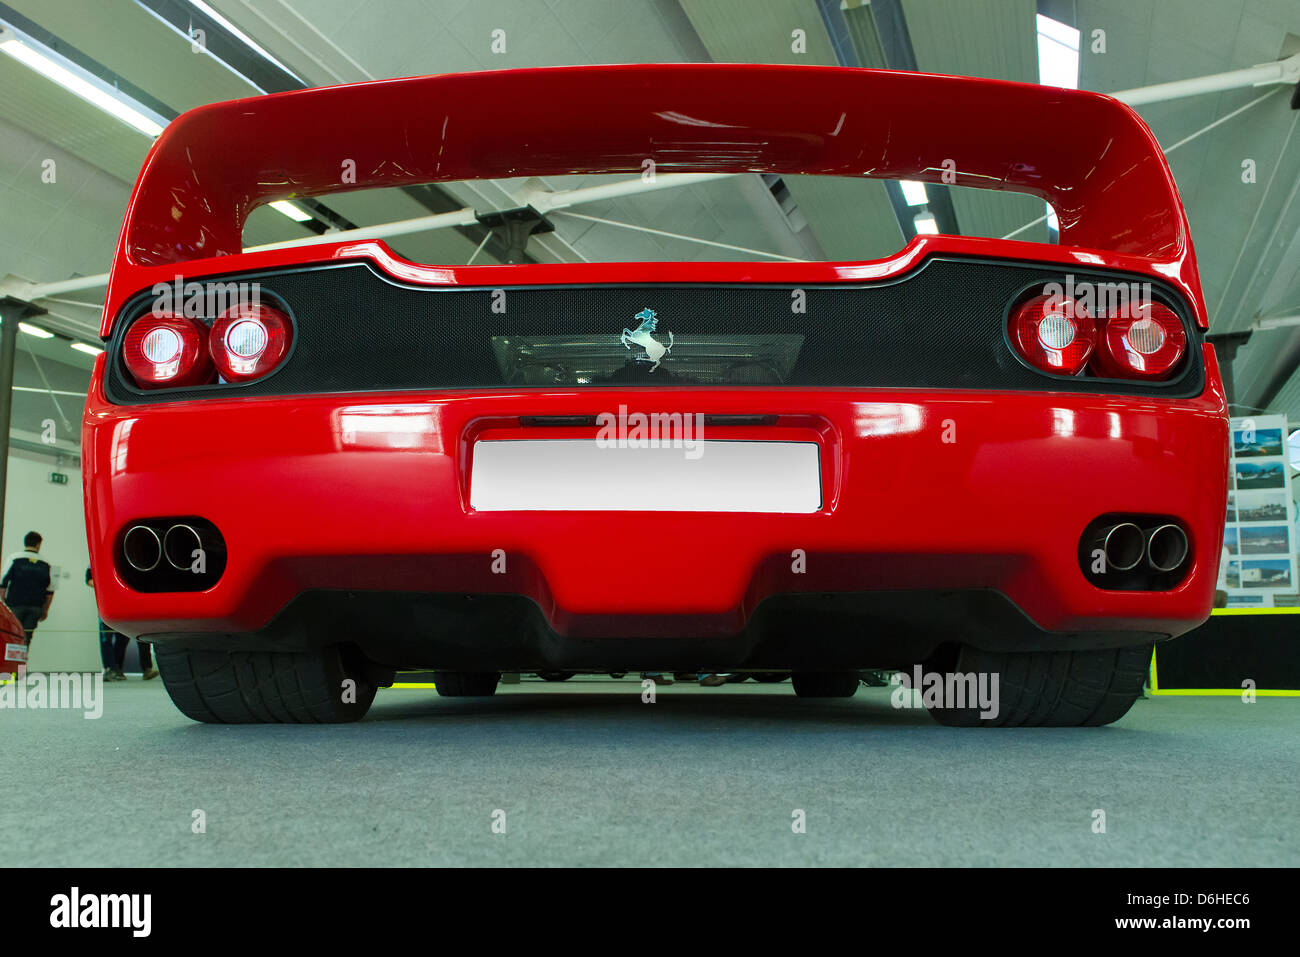 A Ferrari red Car from rear Stock Photo